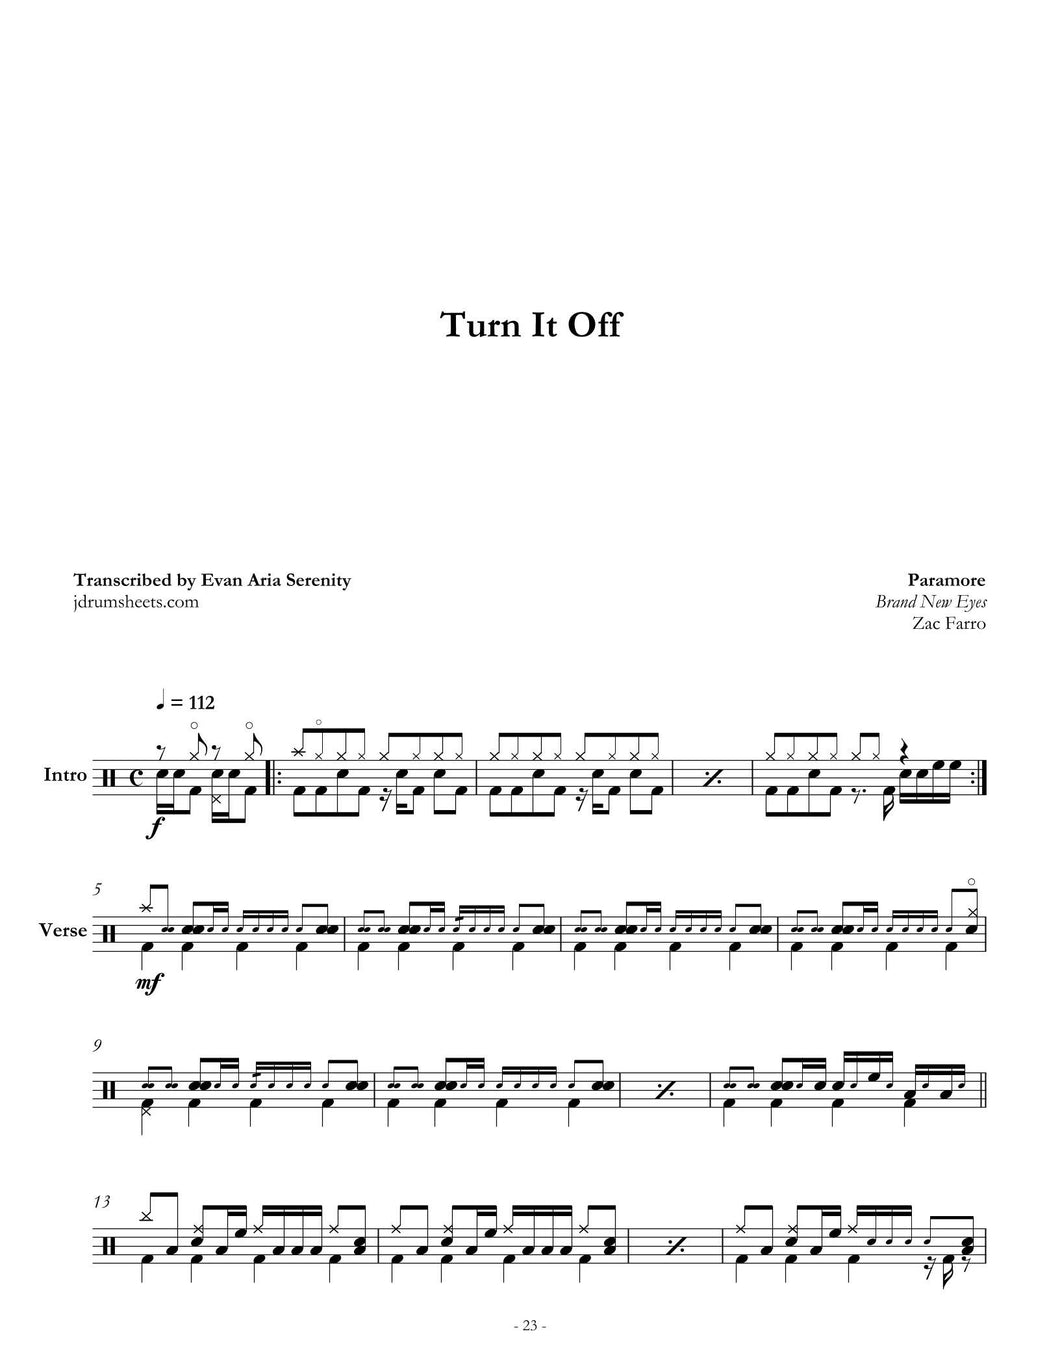 Turn It Off - Paramore - Full Drum Transcription / Drum Sheet Music - Jaslow Drum Sheets